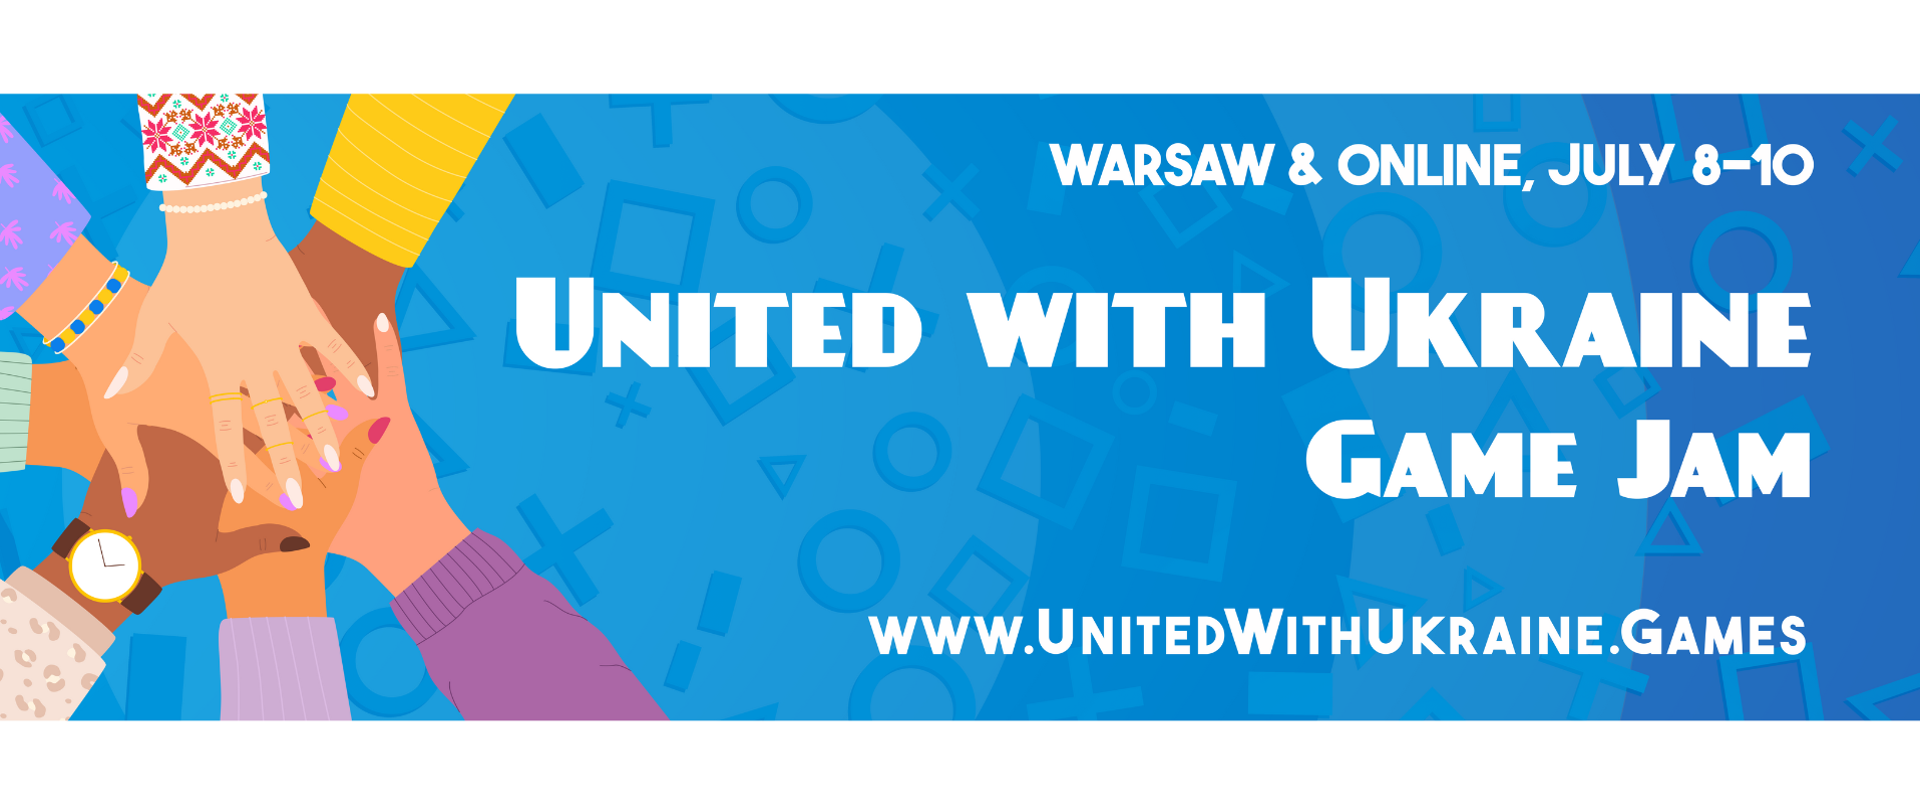 WARSAW & ONLINE, JULY 8-10
UNITED WITH UKRAINE GAME JAM
WWW.UNITEDWITHUKRAINE.GAMES